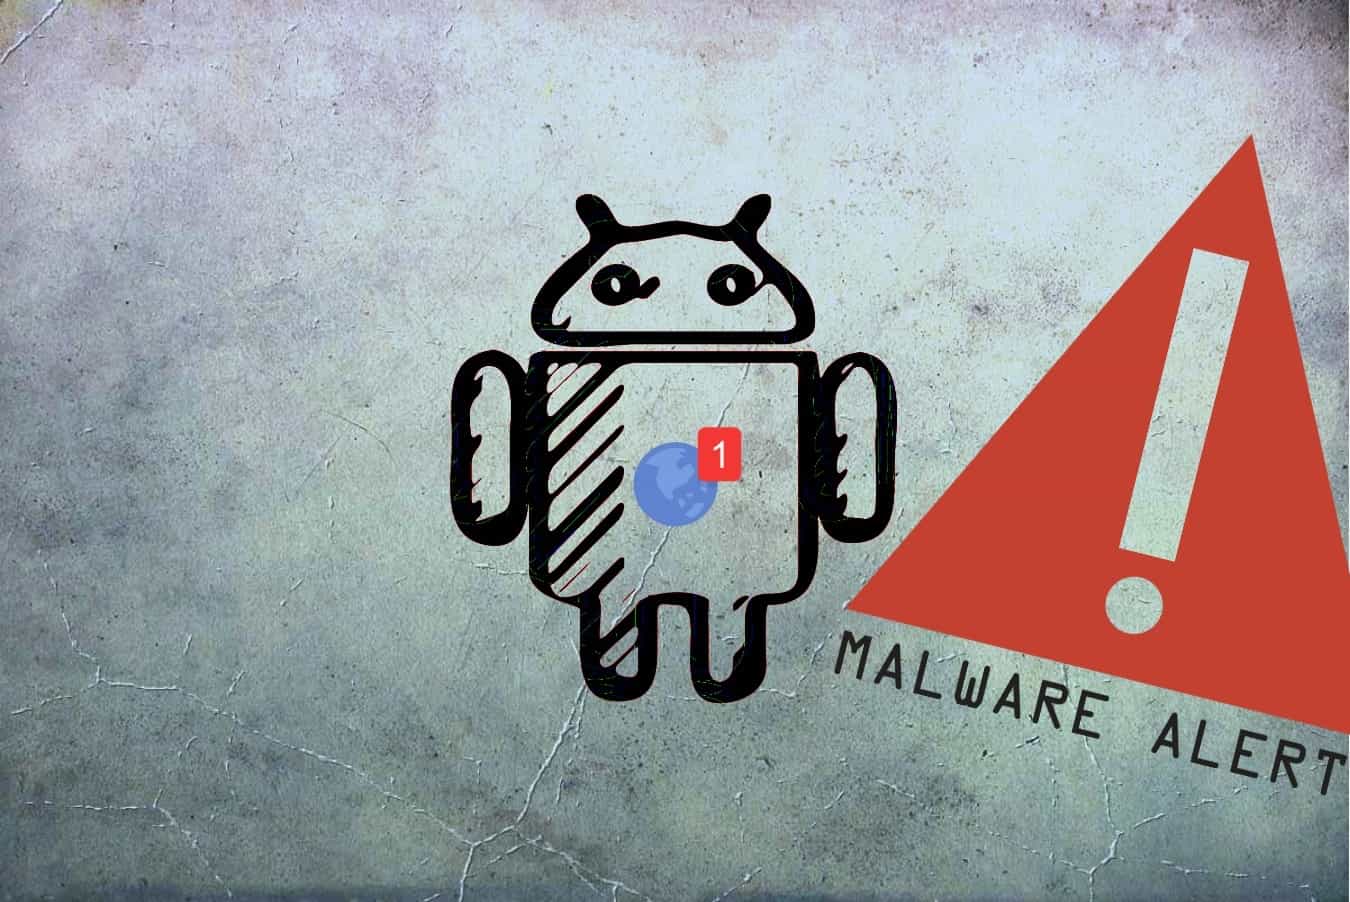 Cookiethief Android malware steals Facebook credentials